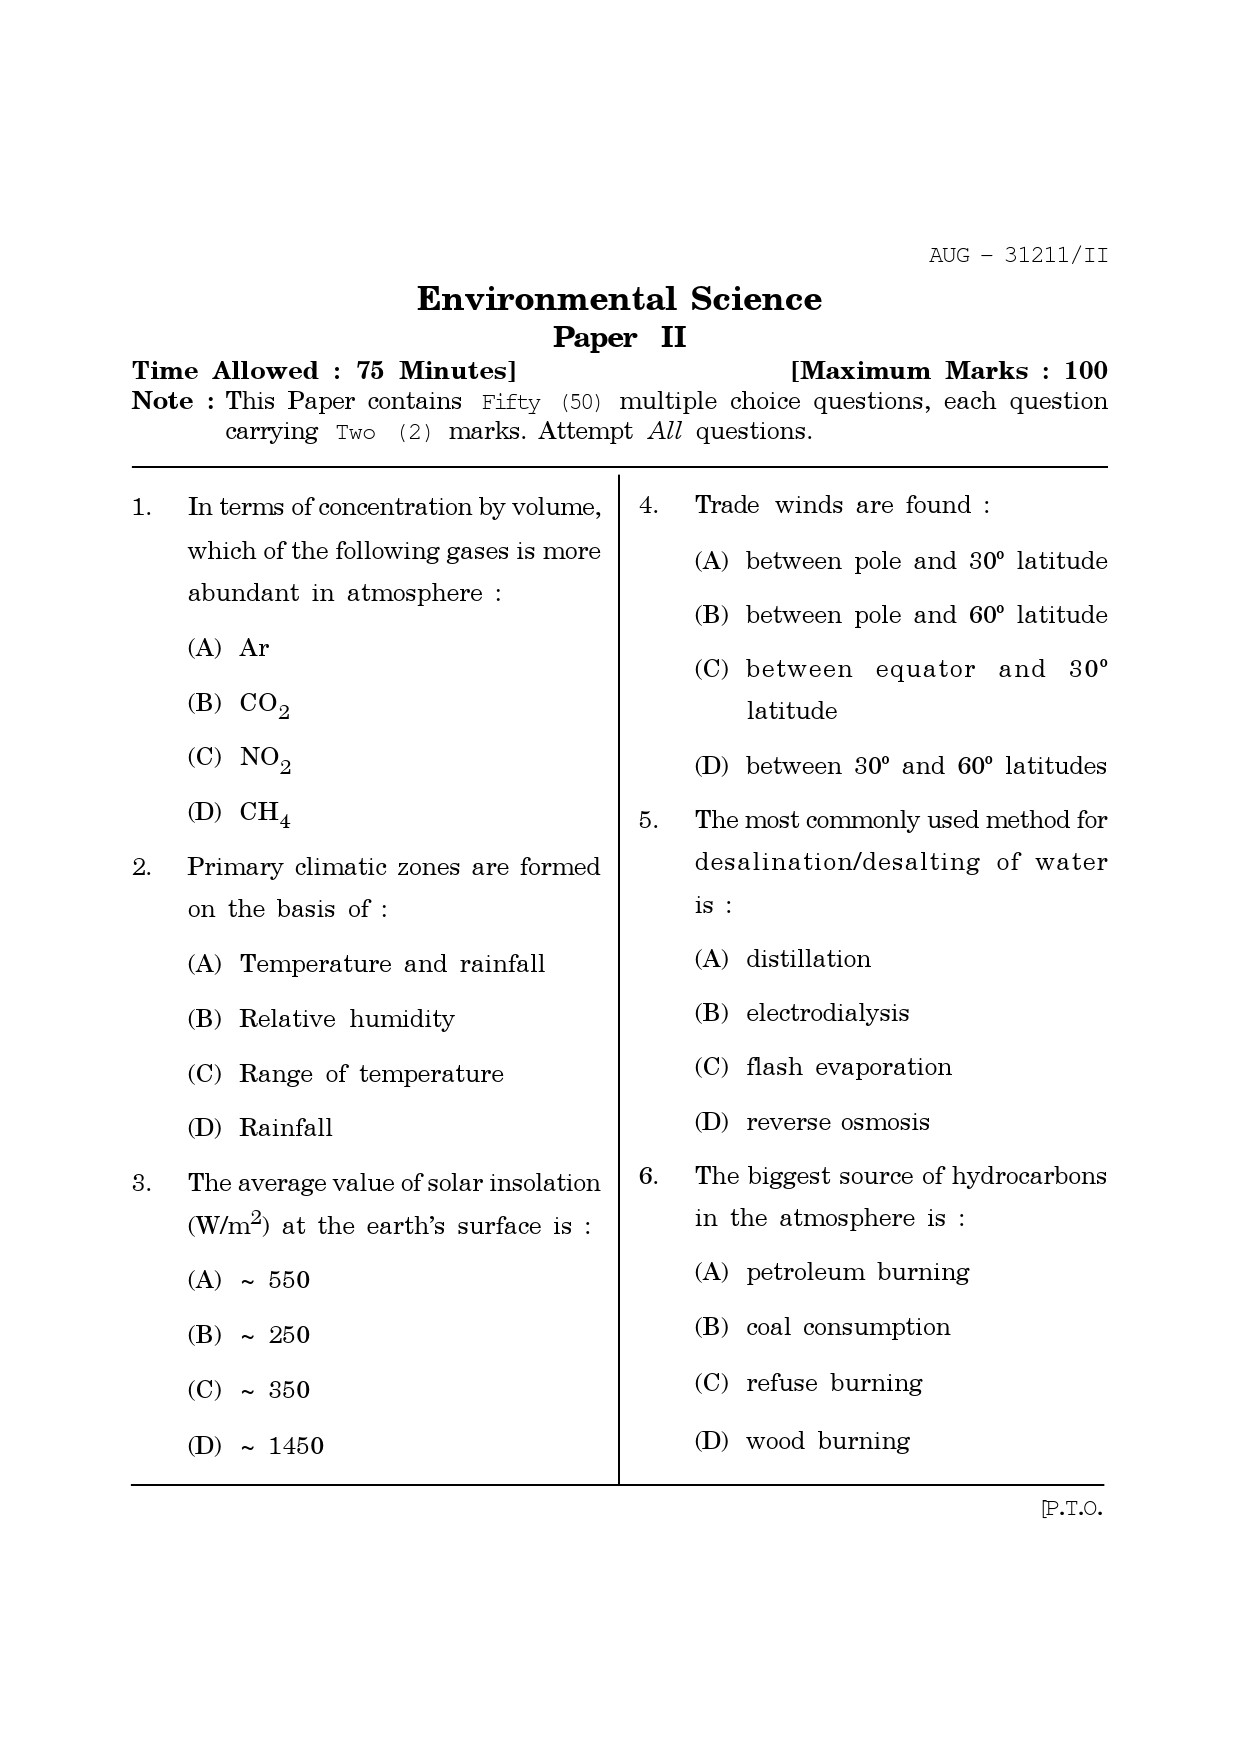 Maharashtra SET Environmental Sciences Question Paper II August 2011 1